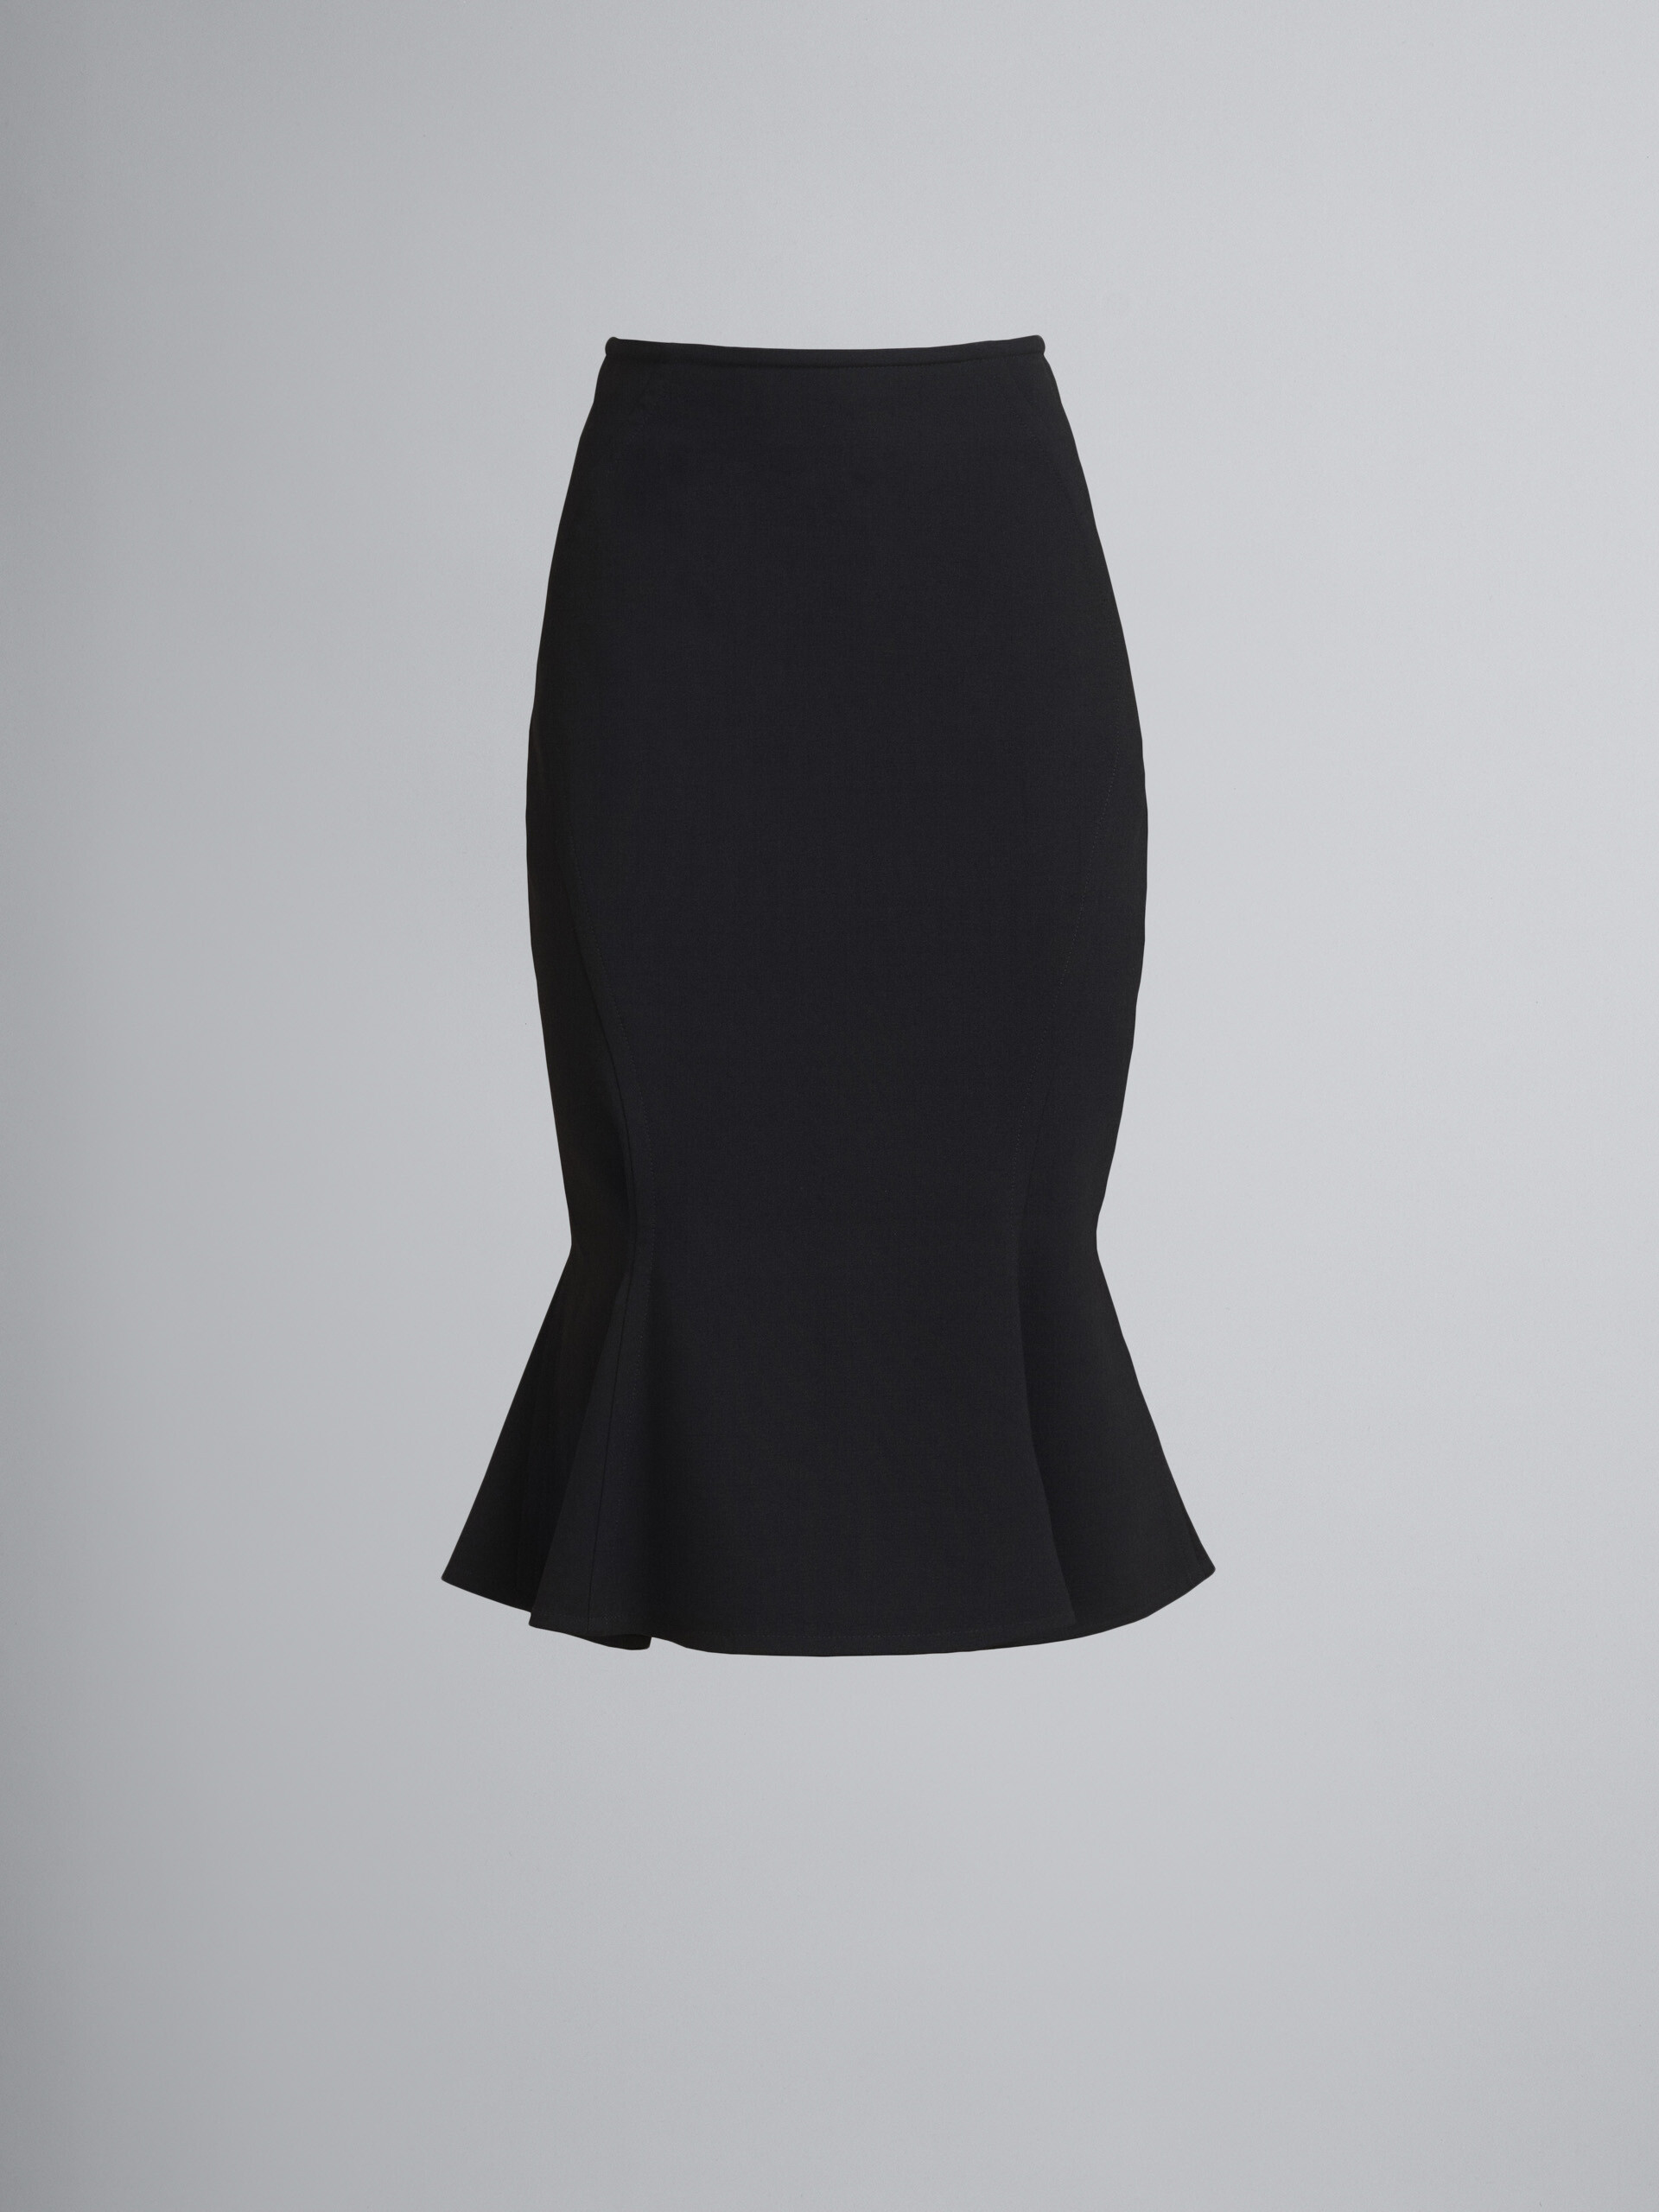 Double wool crepe godet skirt - Skirts - Image 1